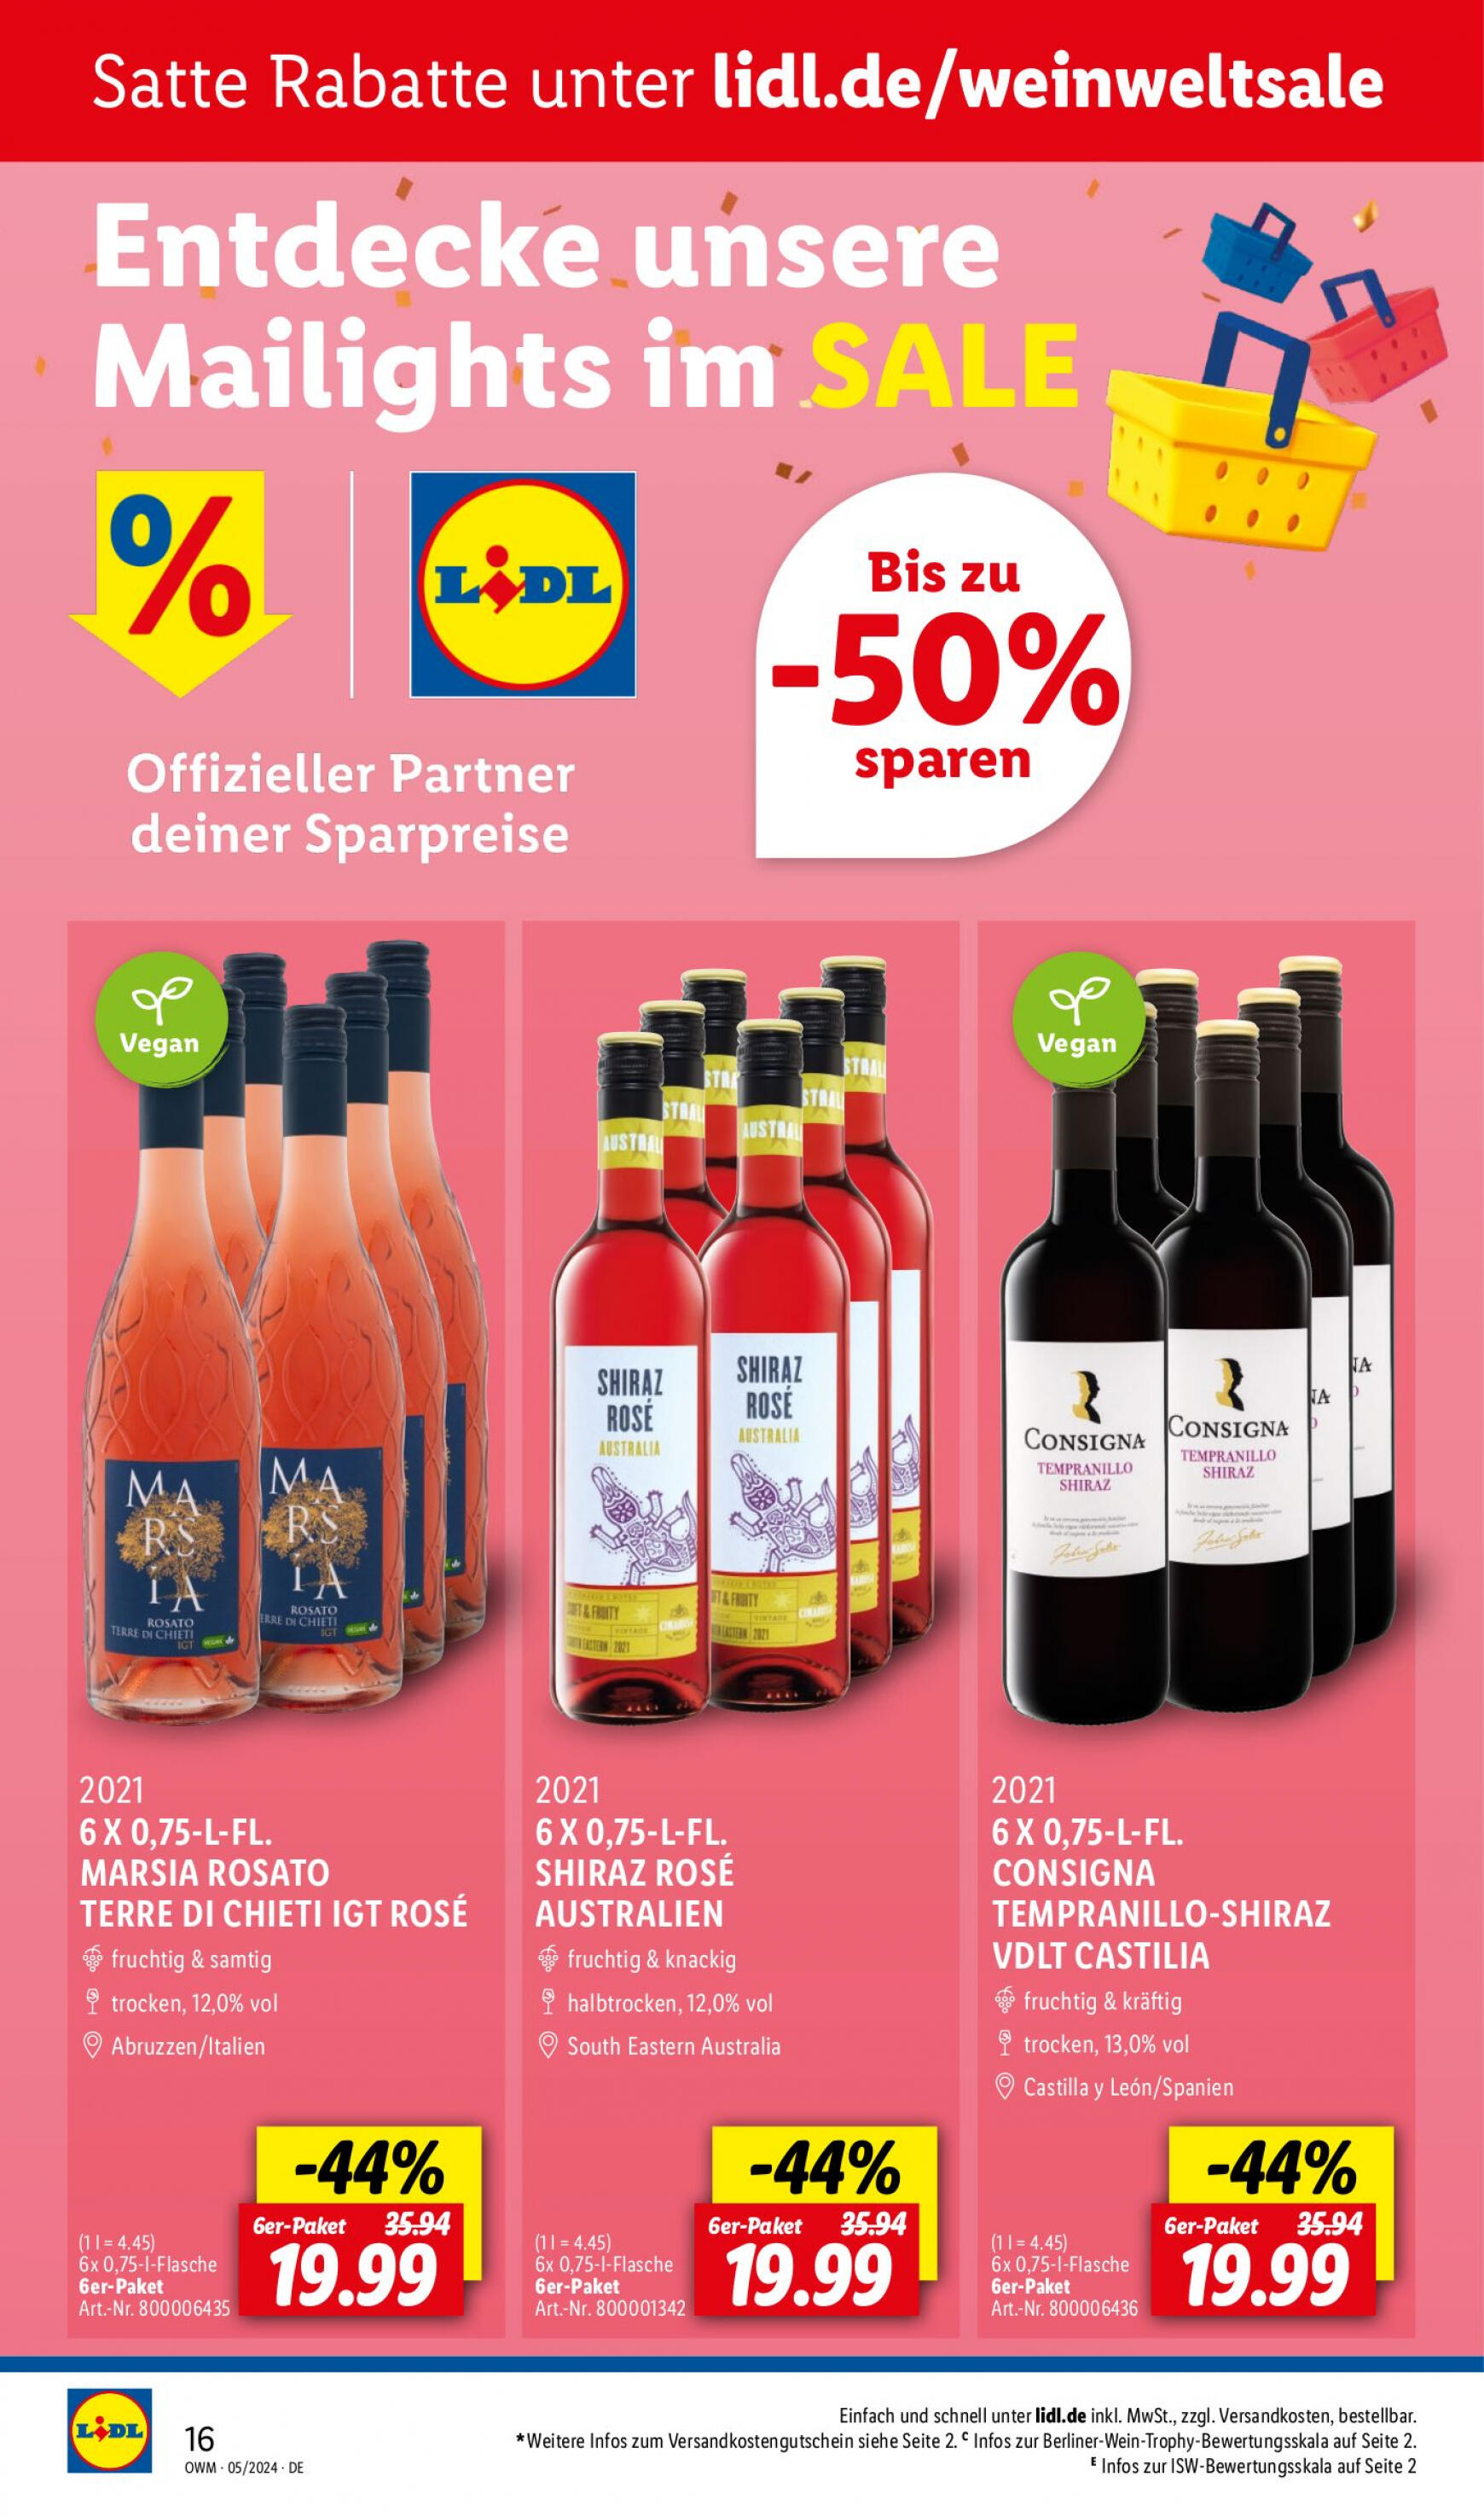 lidl - Flyer Lidl - Highlights in der Weinwelt aktuell 01.05. - 31.05. - page: 16